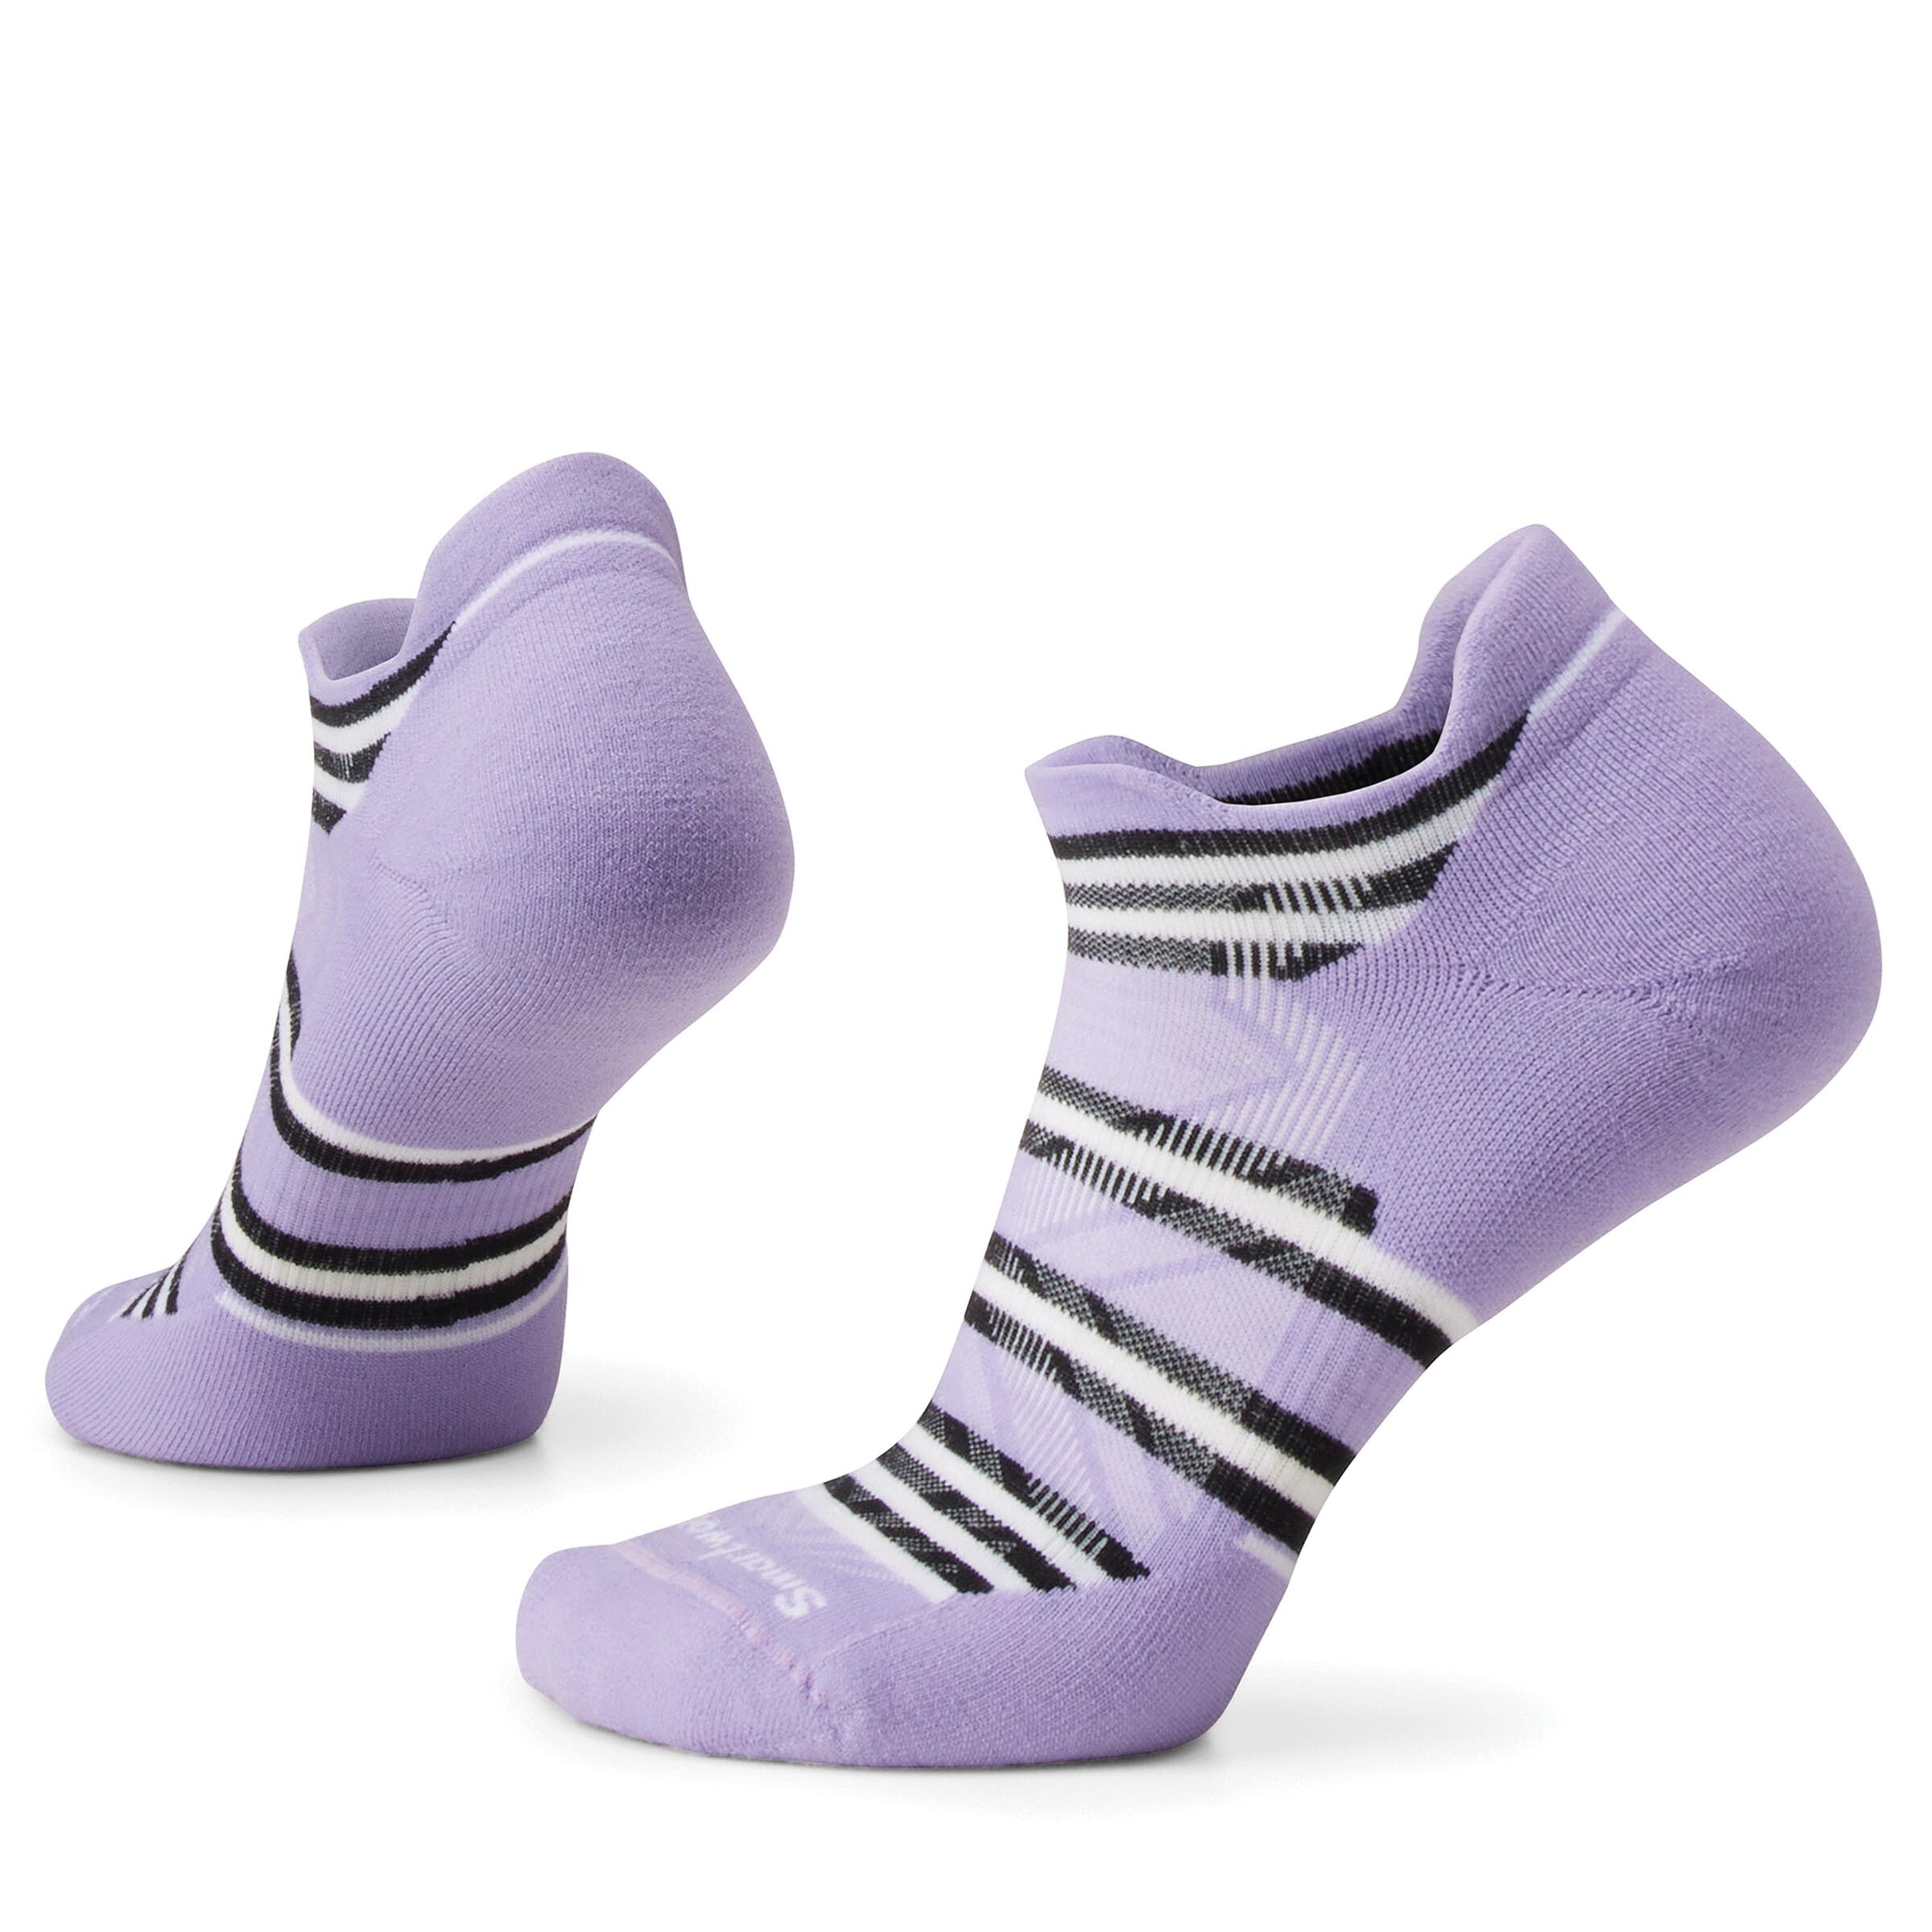 Women's Run Targeted Cushion Low Ankle Socks